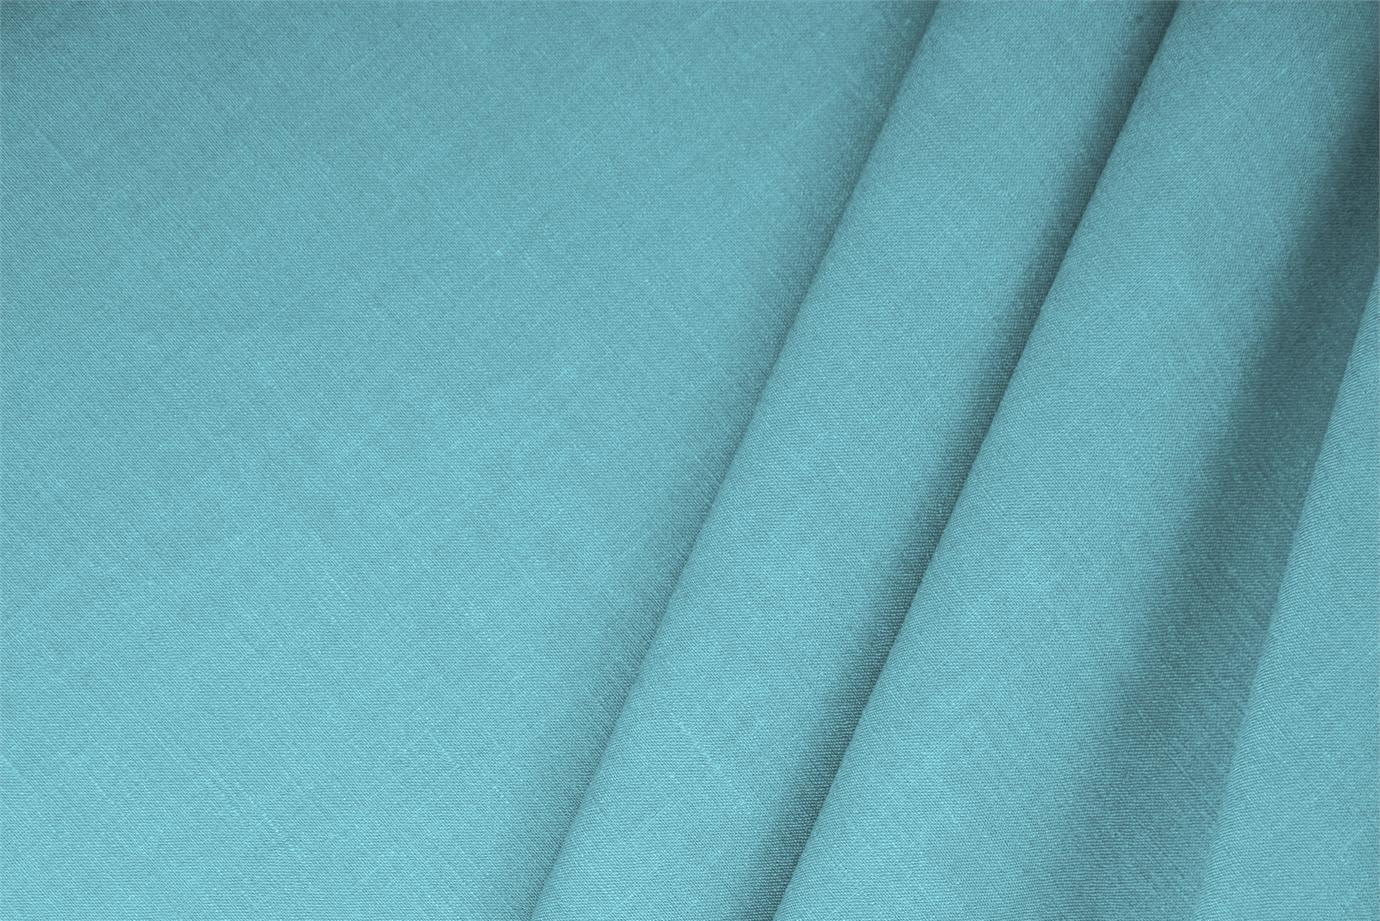 Turquoise Blue Linen, Stretch, Viscose Linen Blend fabric for dressmaking